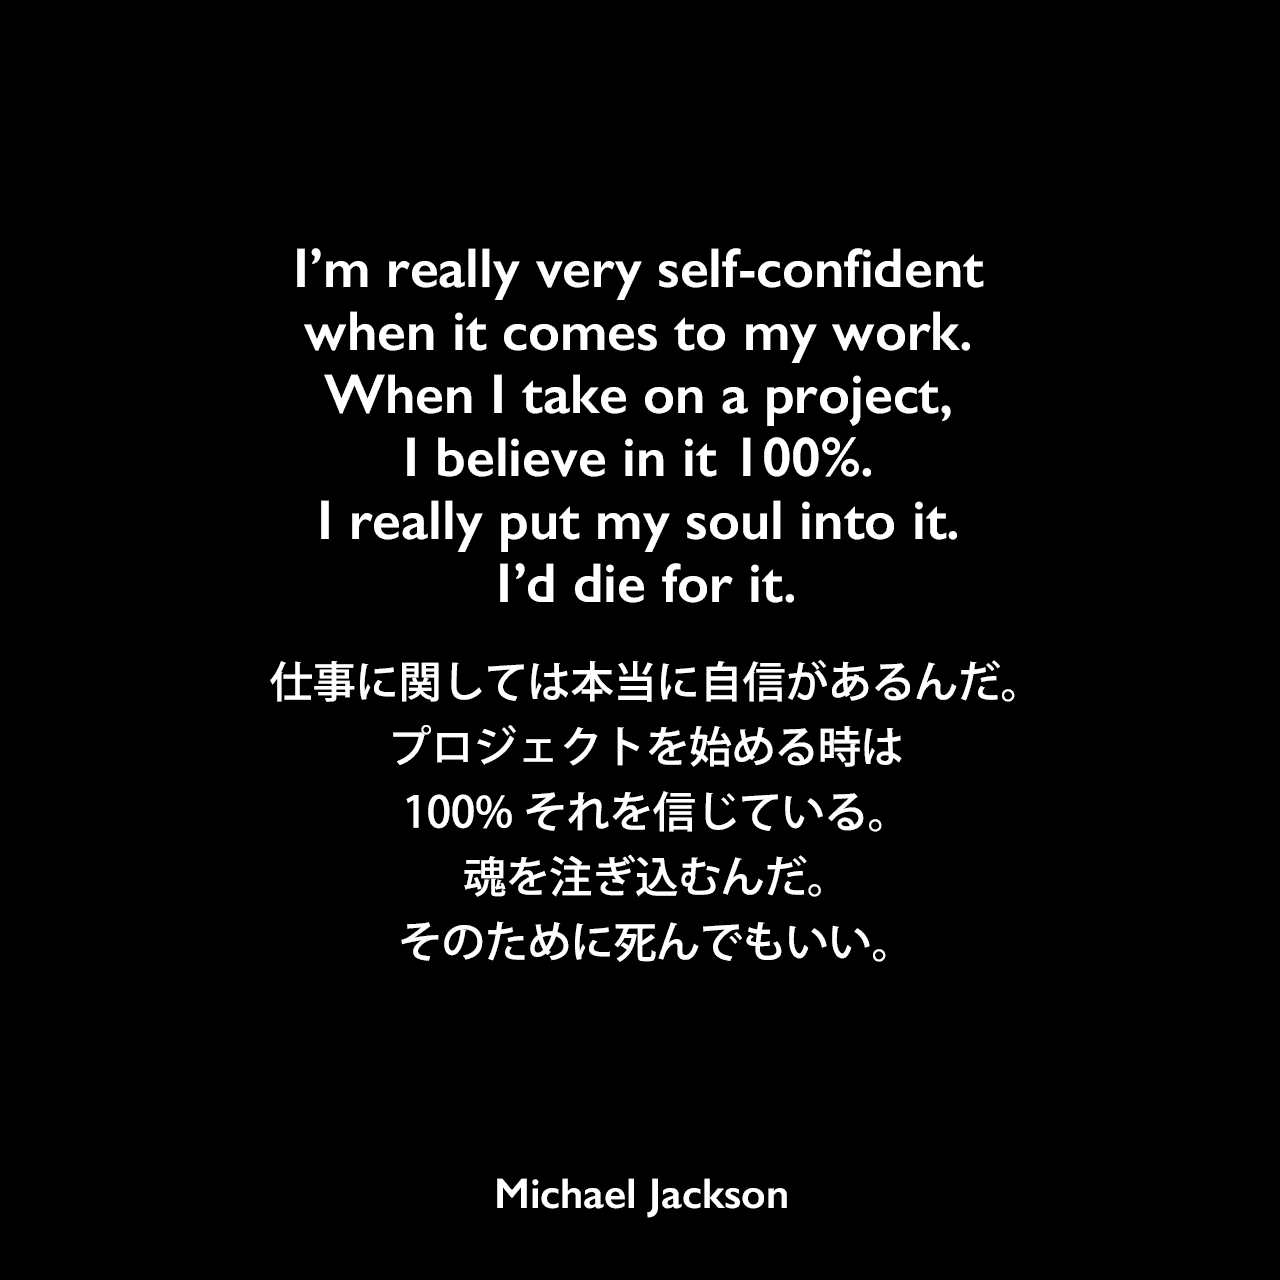 I’m really very self-confident when it comes to my work. When I take on a project, I believe in it 100%. I really put my soul into it. I’d die for it.仕事に関しては本当に自信があるんだ。プロジェクトを始める時は100%それを信じている。魂を注ぎ込むんだ。そのために死んでもいい。Michael Jackson